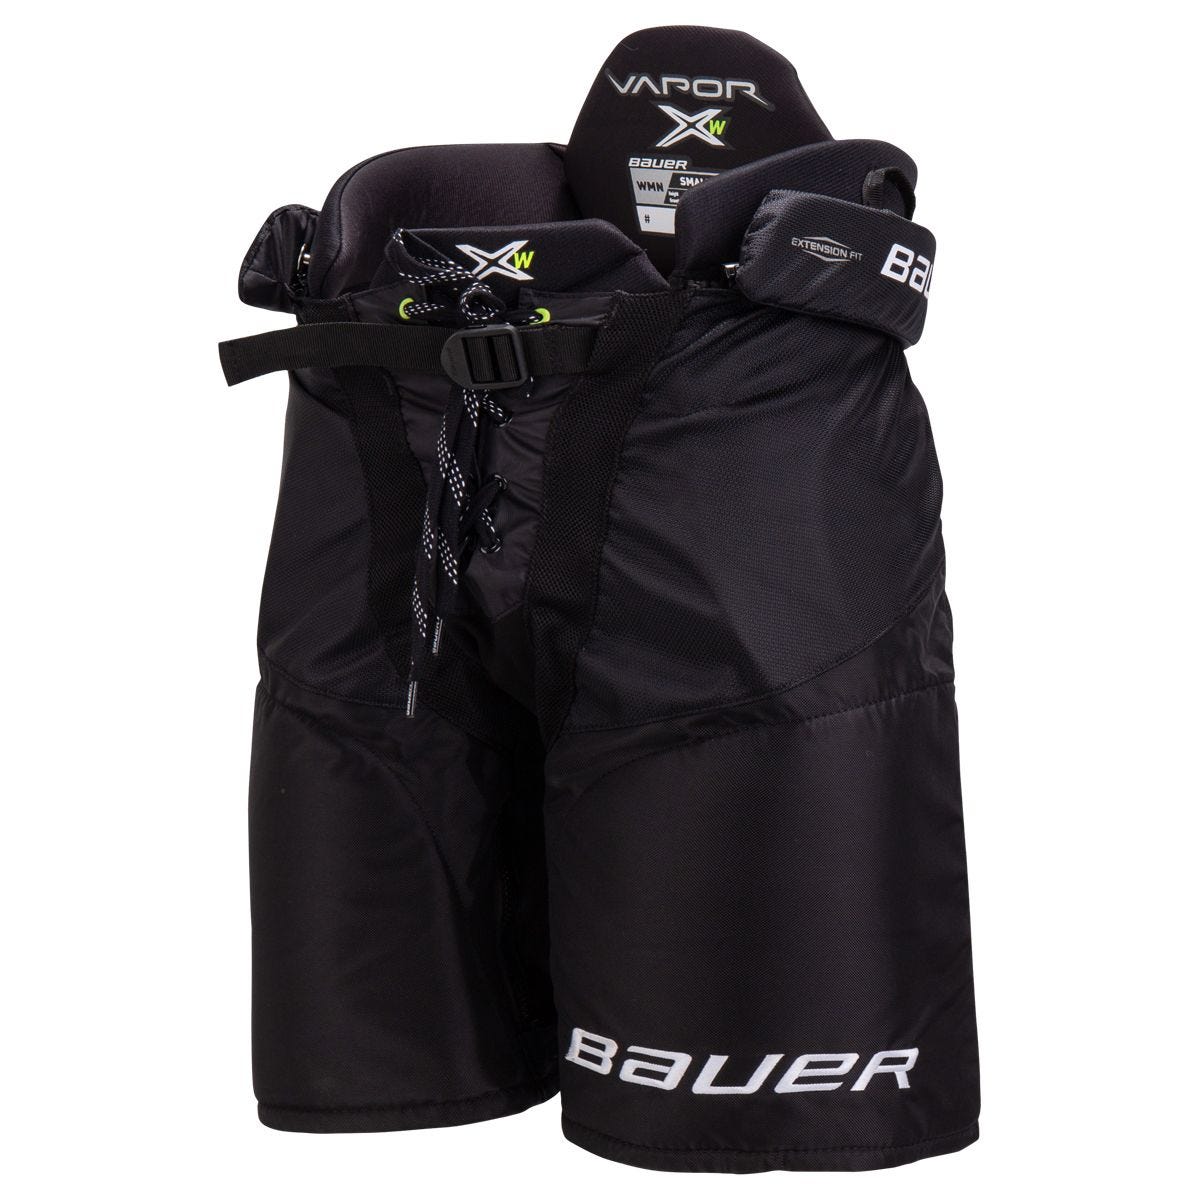 Bauer Vapor X-W Hockey Shoulder Pads - Womens